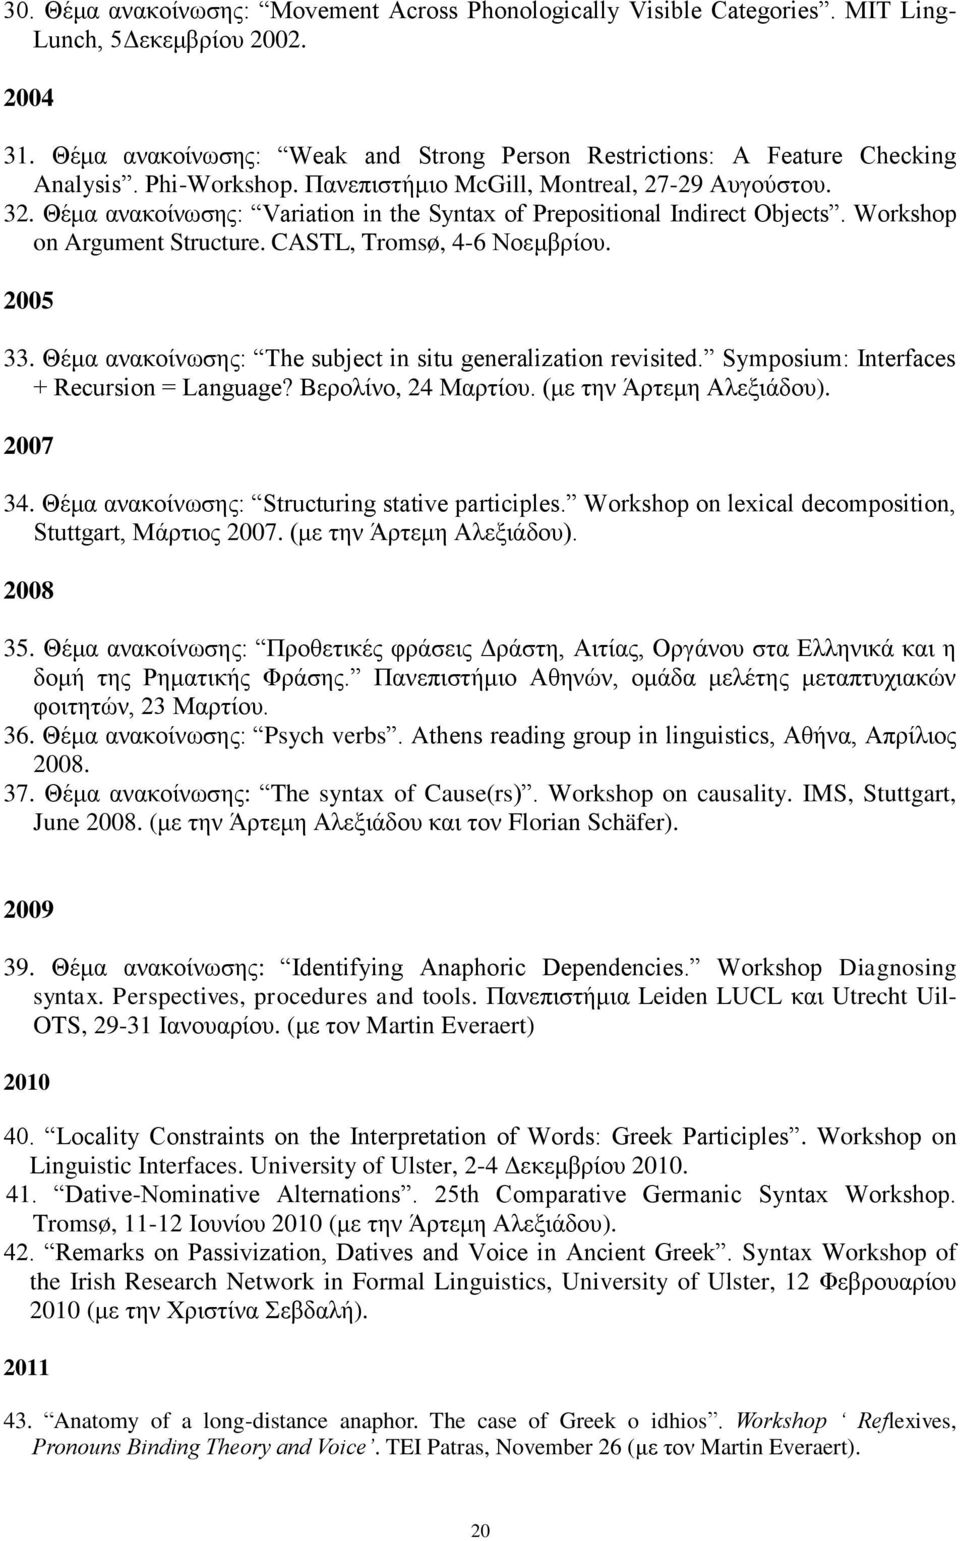 CASTL, Tromsø, 4-6 Νοεμβρίου. 2005 33. Θέμα ανακοίνωσης: The subject in situ generalization revisited. Symposium: Interfaces + Recursion = Language? Βερολίνο, 24 Μαρτίου. (με την Άρτεμη Αλεξιάδου).